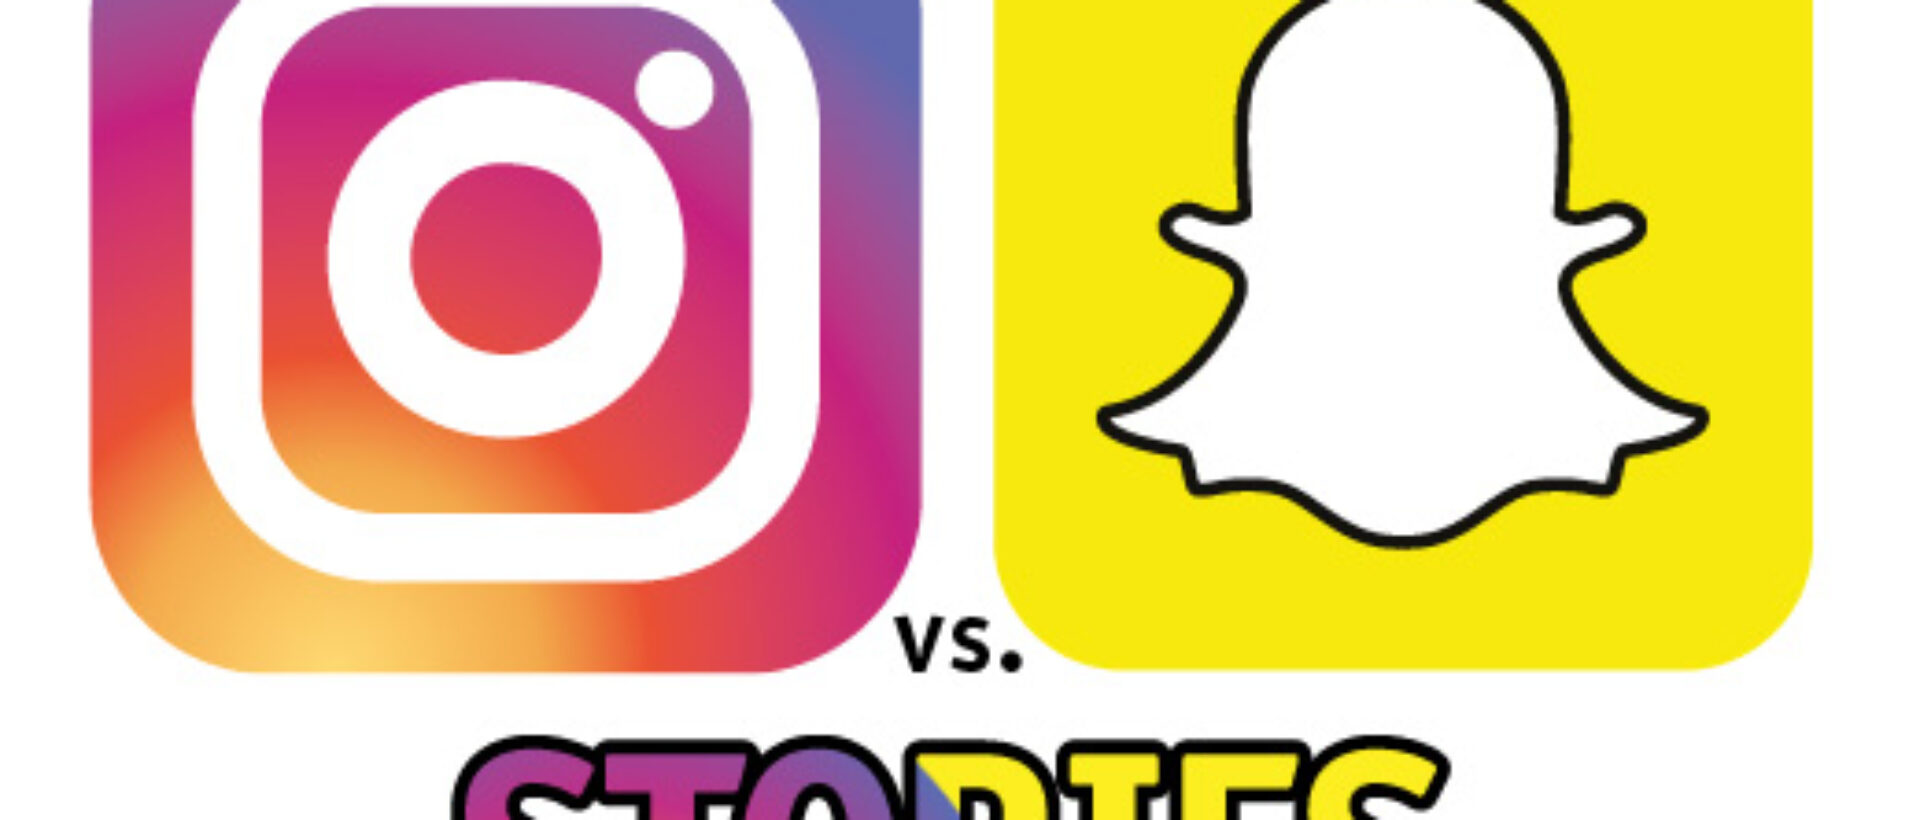 Snapchat vs. Instagram Stories